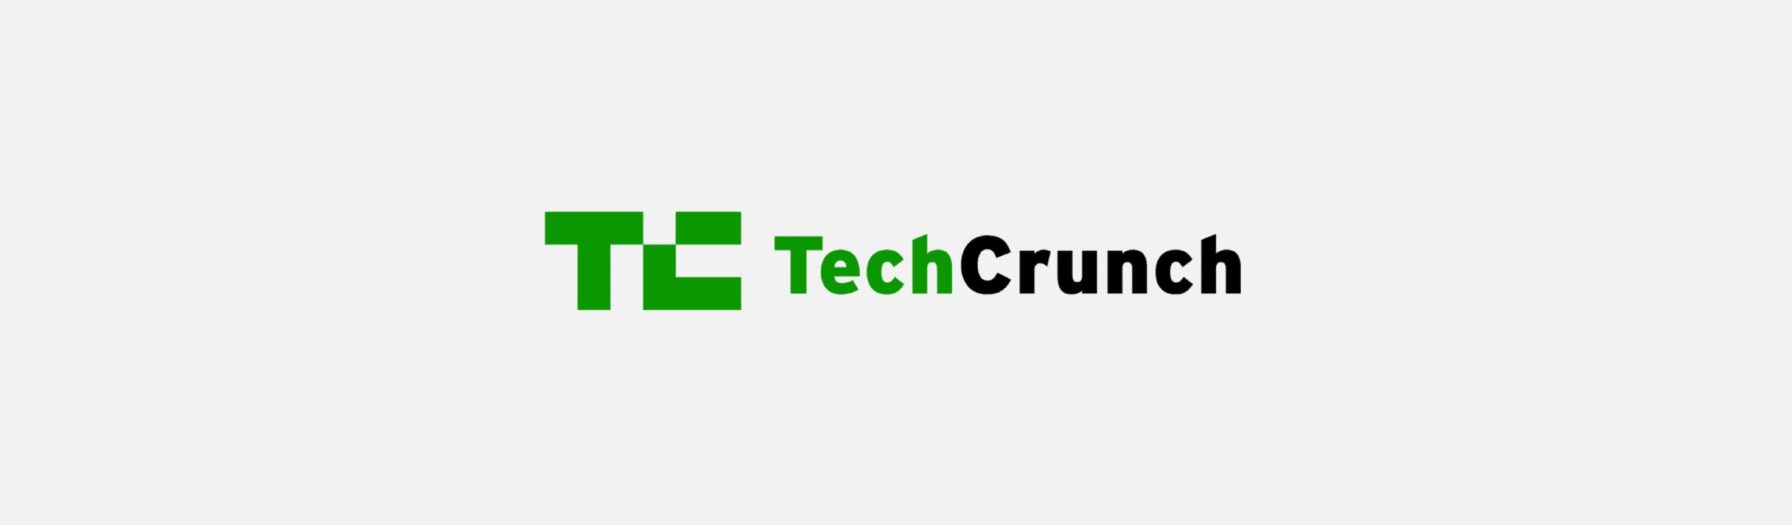  TechCrunch logo